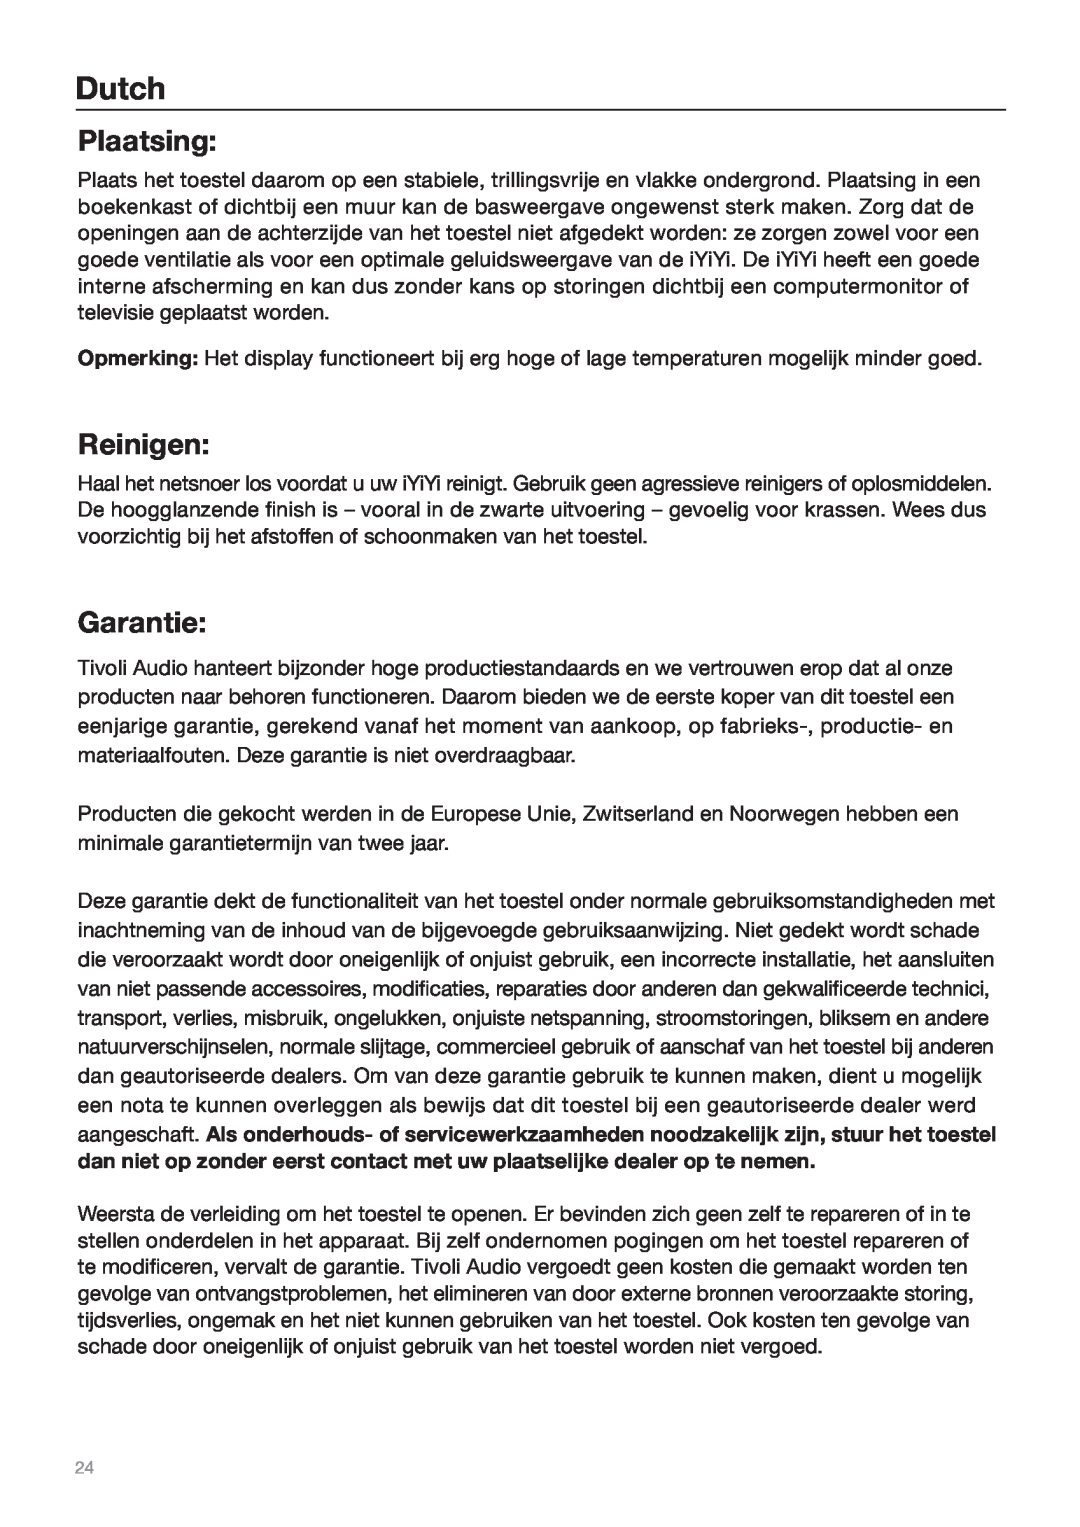 Tivoli Audio Sound System owner manual Plaatsing, Reinigen, Garantie, Dutch 